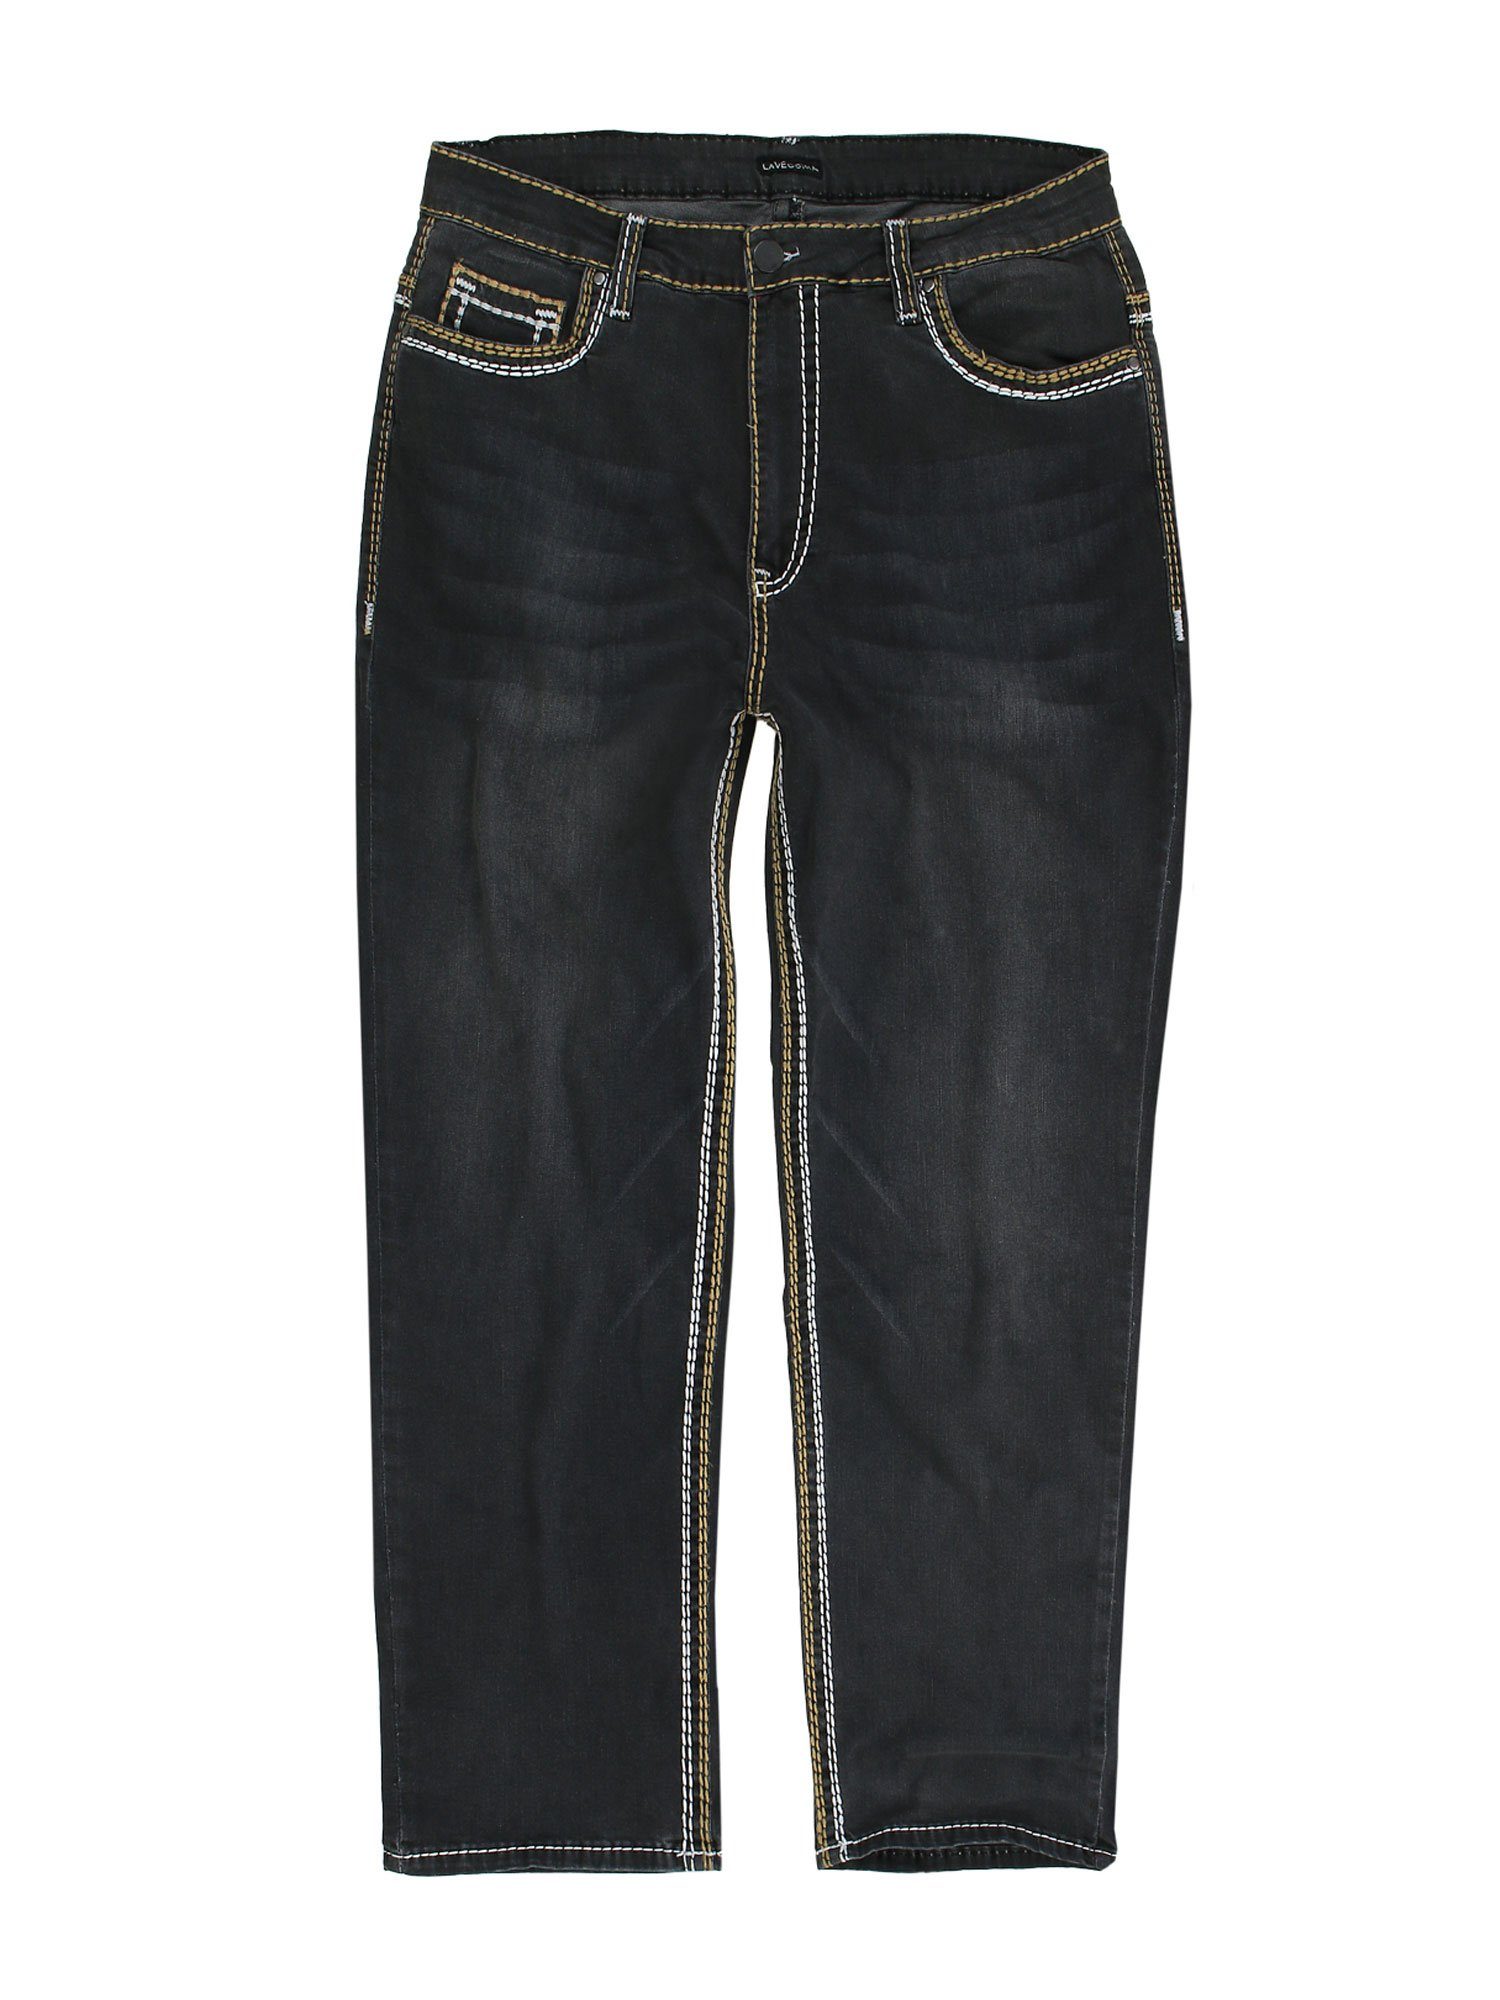 Lavecchia Comfort-fit-Jeans Übergrößen Herren Jeanshose LV-503 Stretch mit Elasthan & dicker Naht stone-black